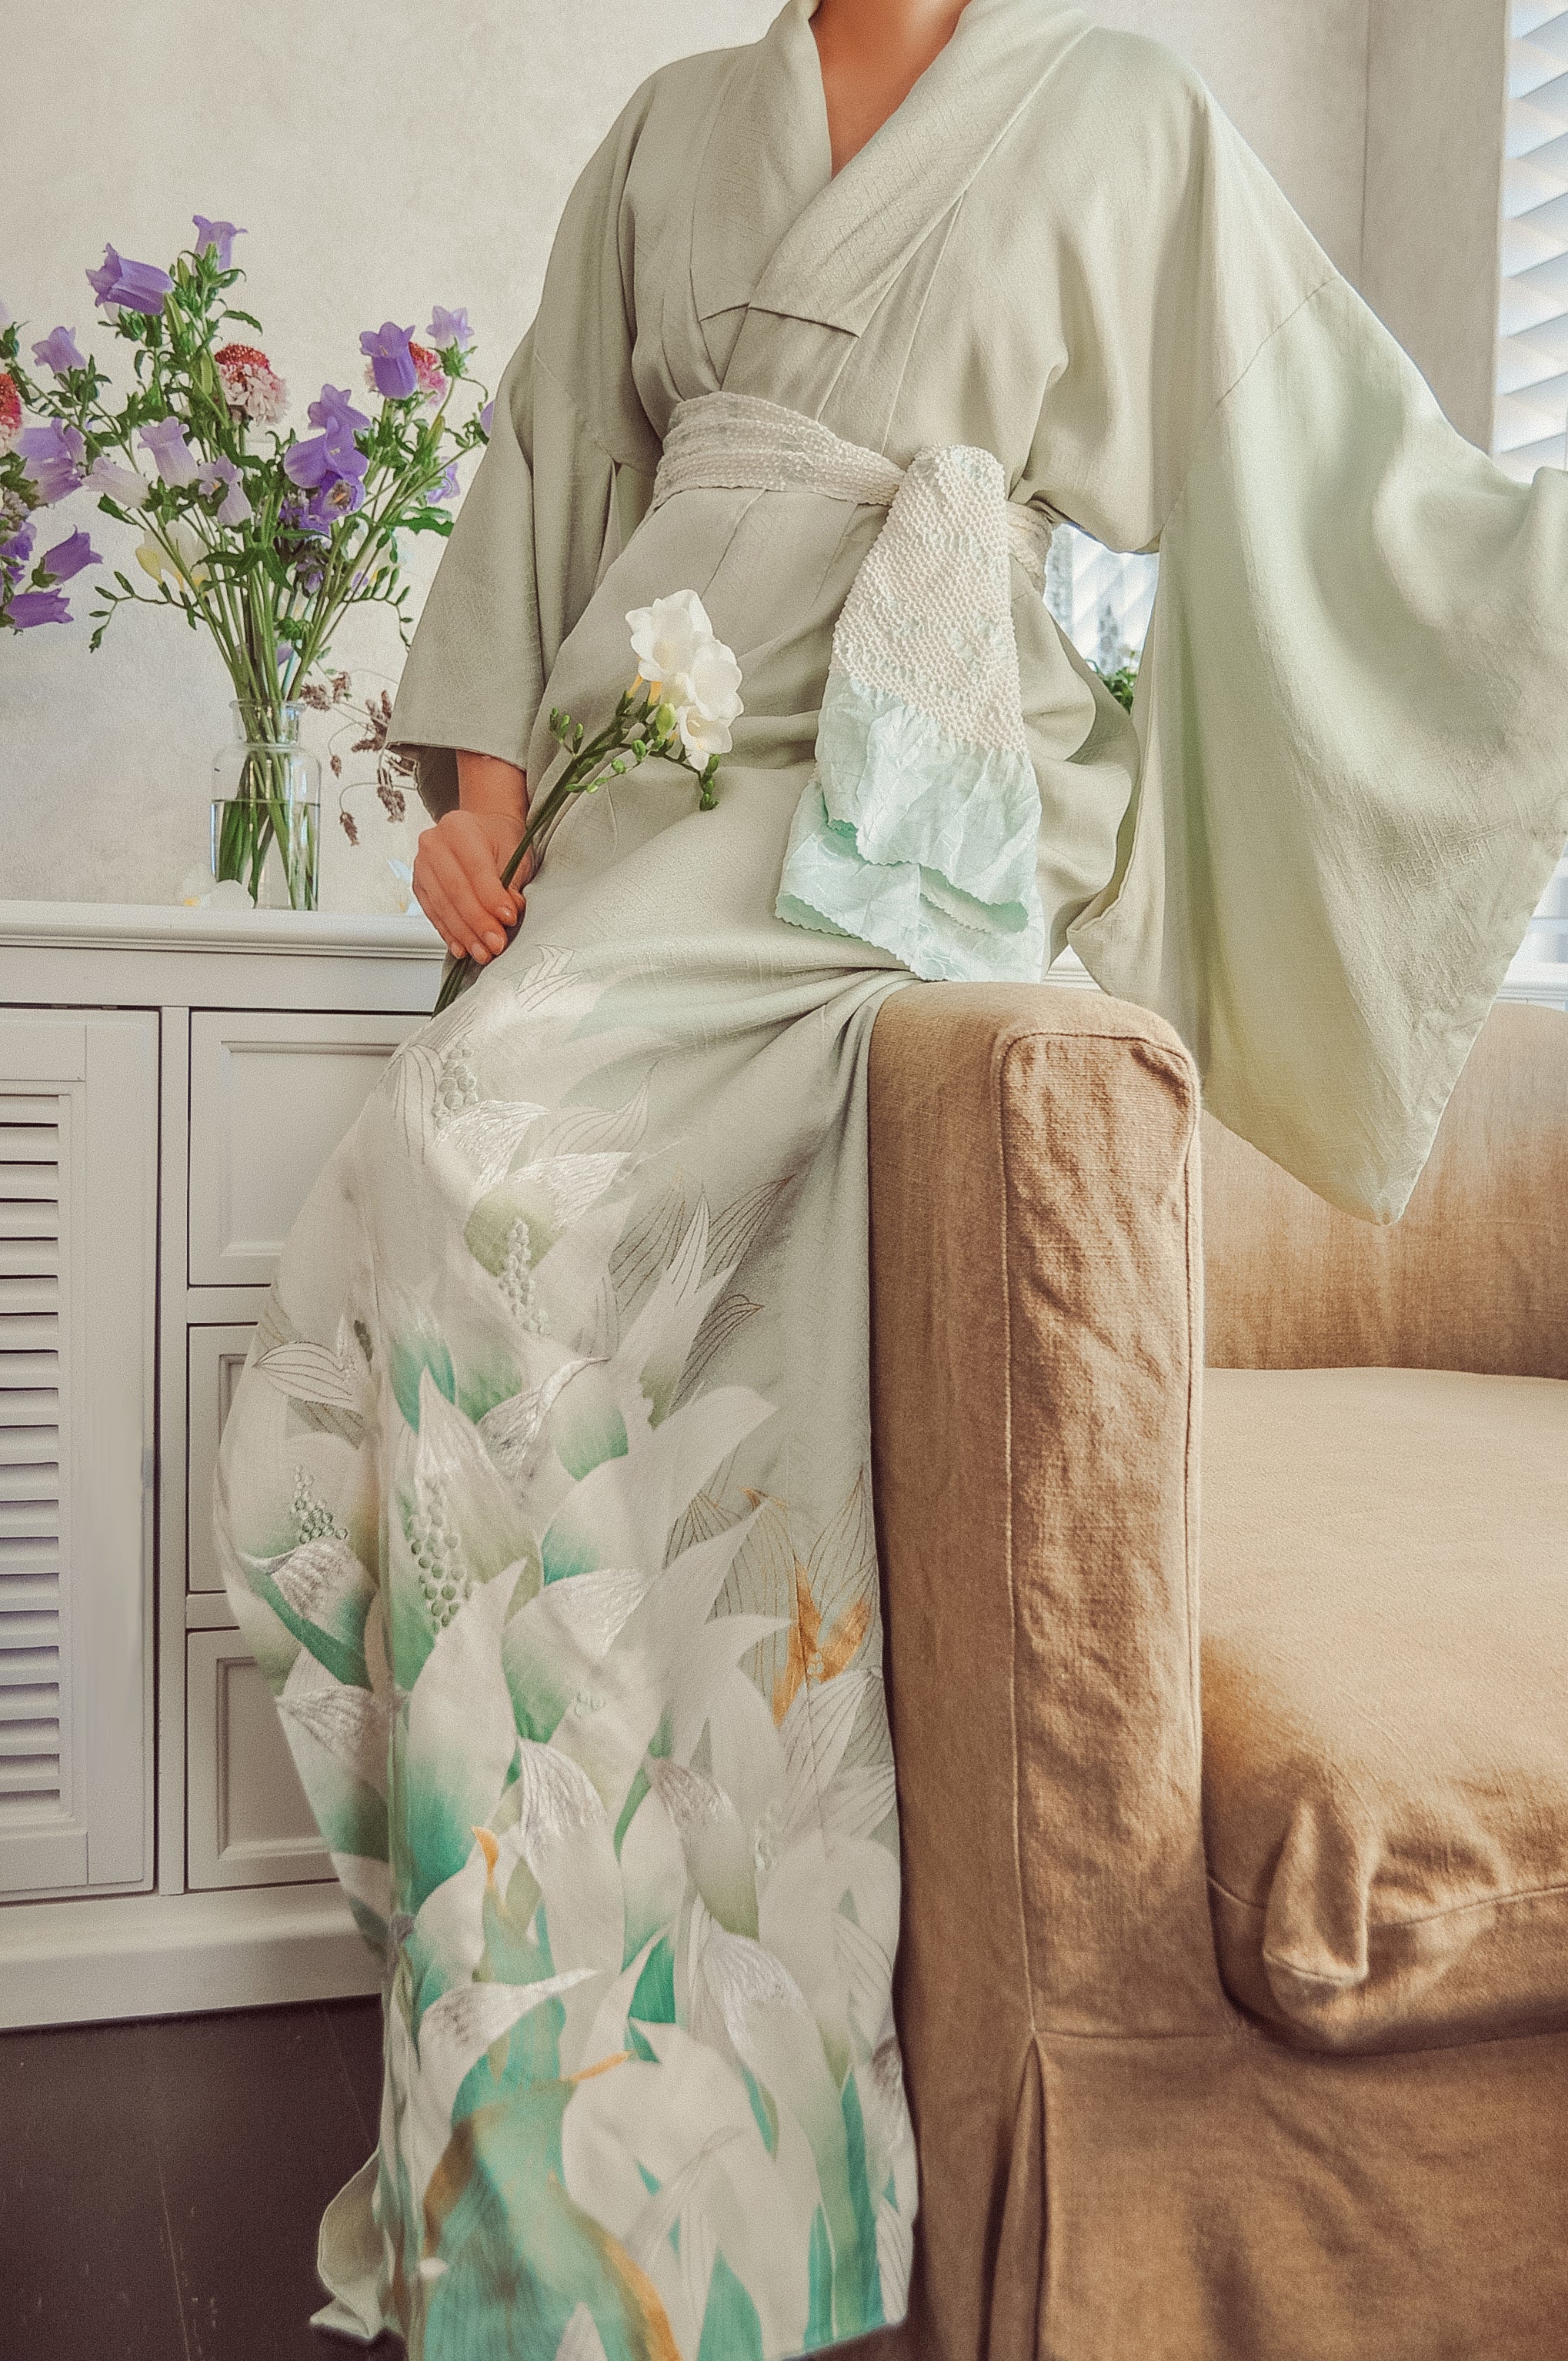 Summer of Kyoto 60s Textured Viscose Embroidery Vintage Kimono Robe